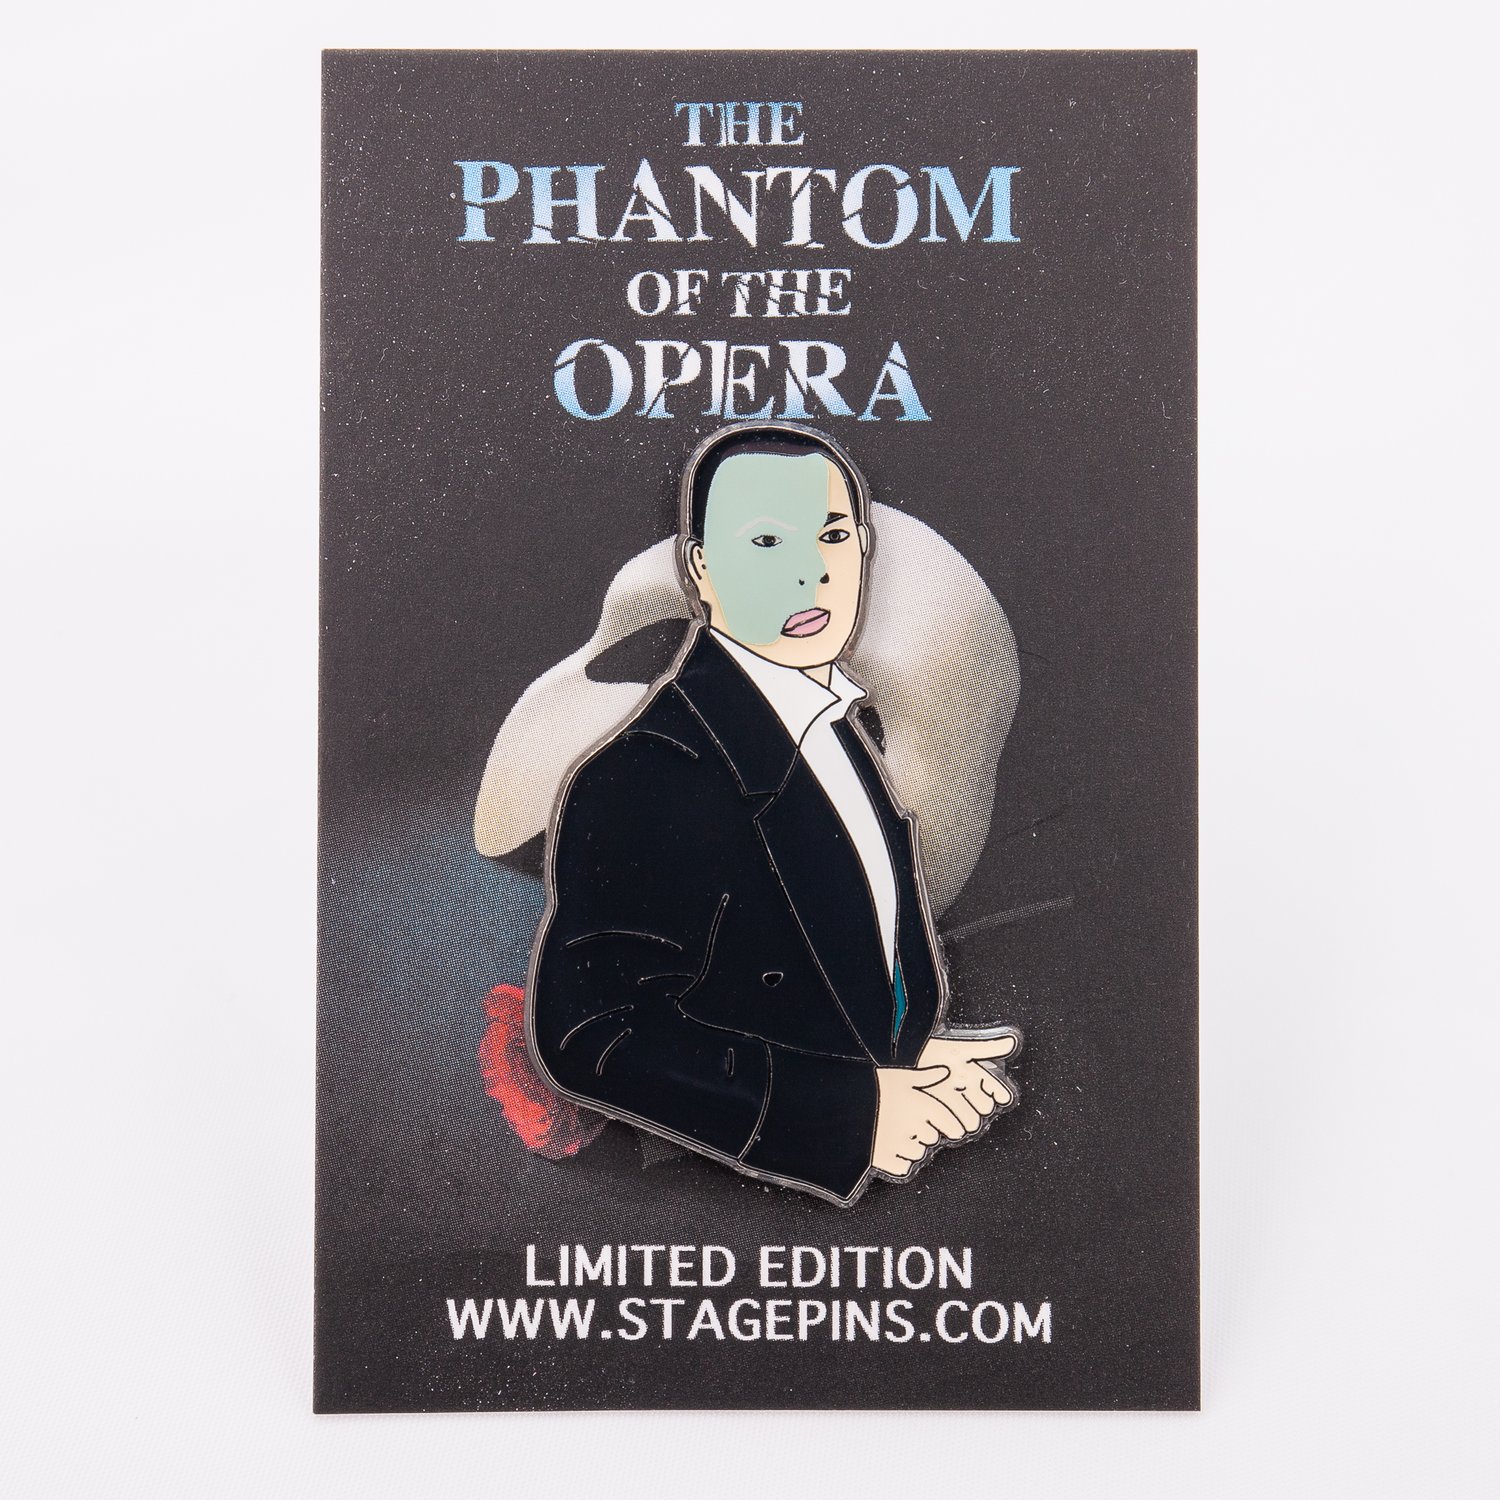 The Phantom From The Phantom Of The Opera 